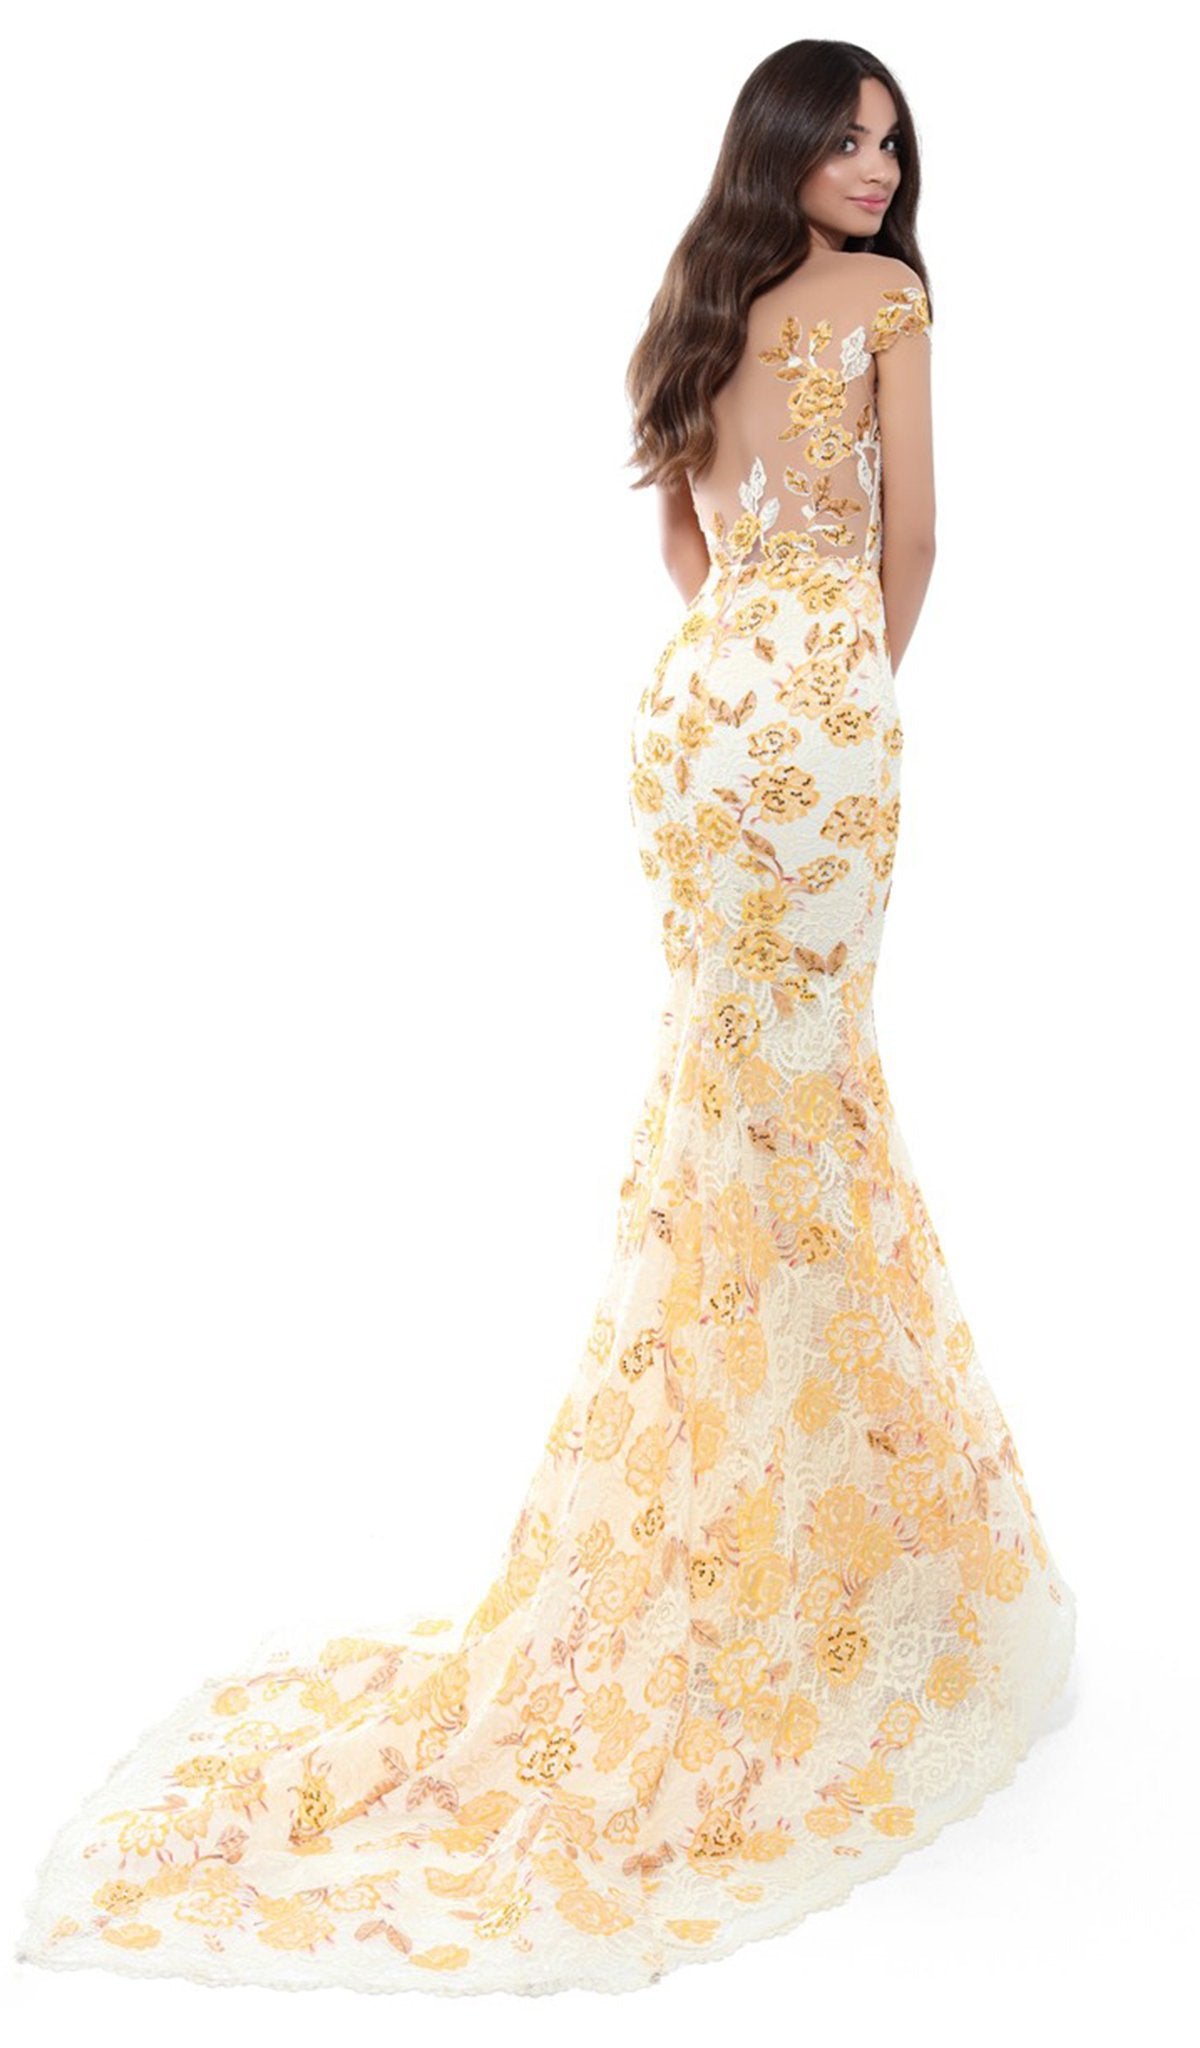 Tarik Ediz - 50493 Floral Lace Cap Sleeve Mermaid Gown With Train In Yellow